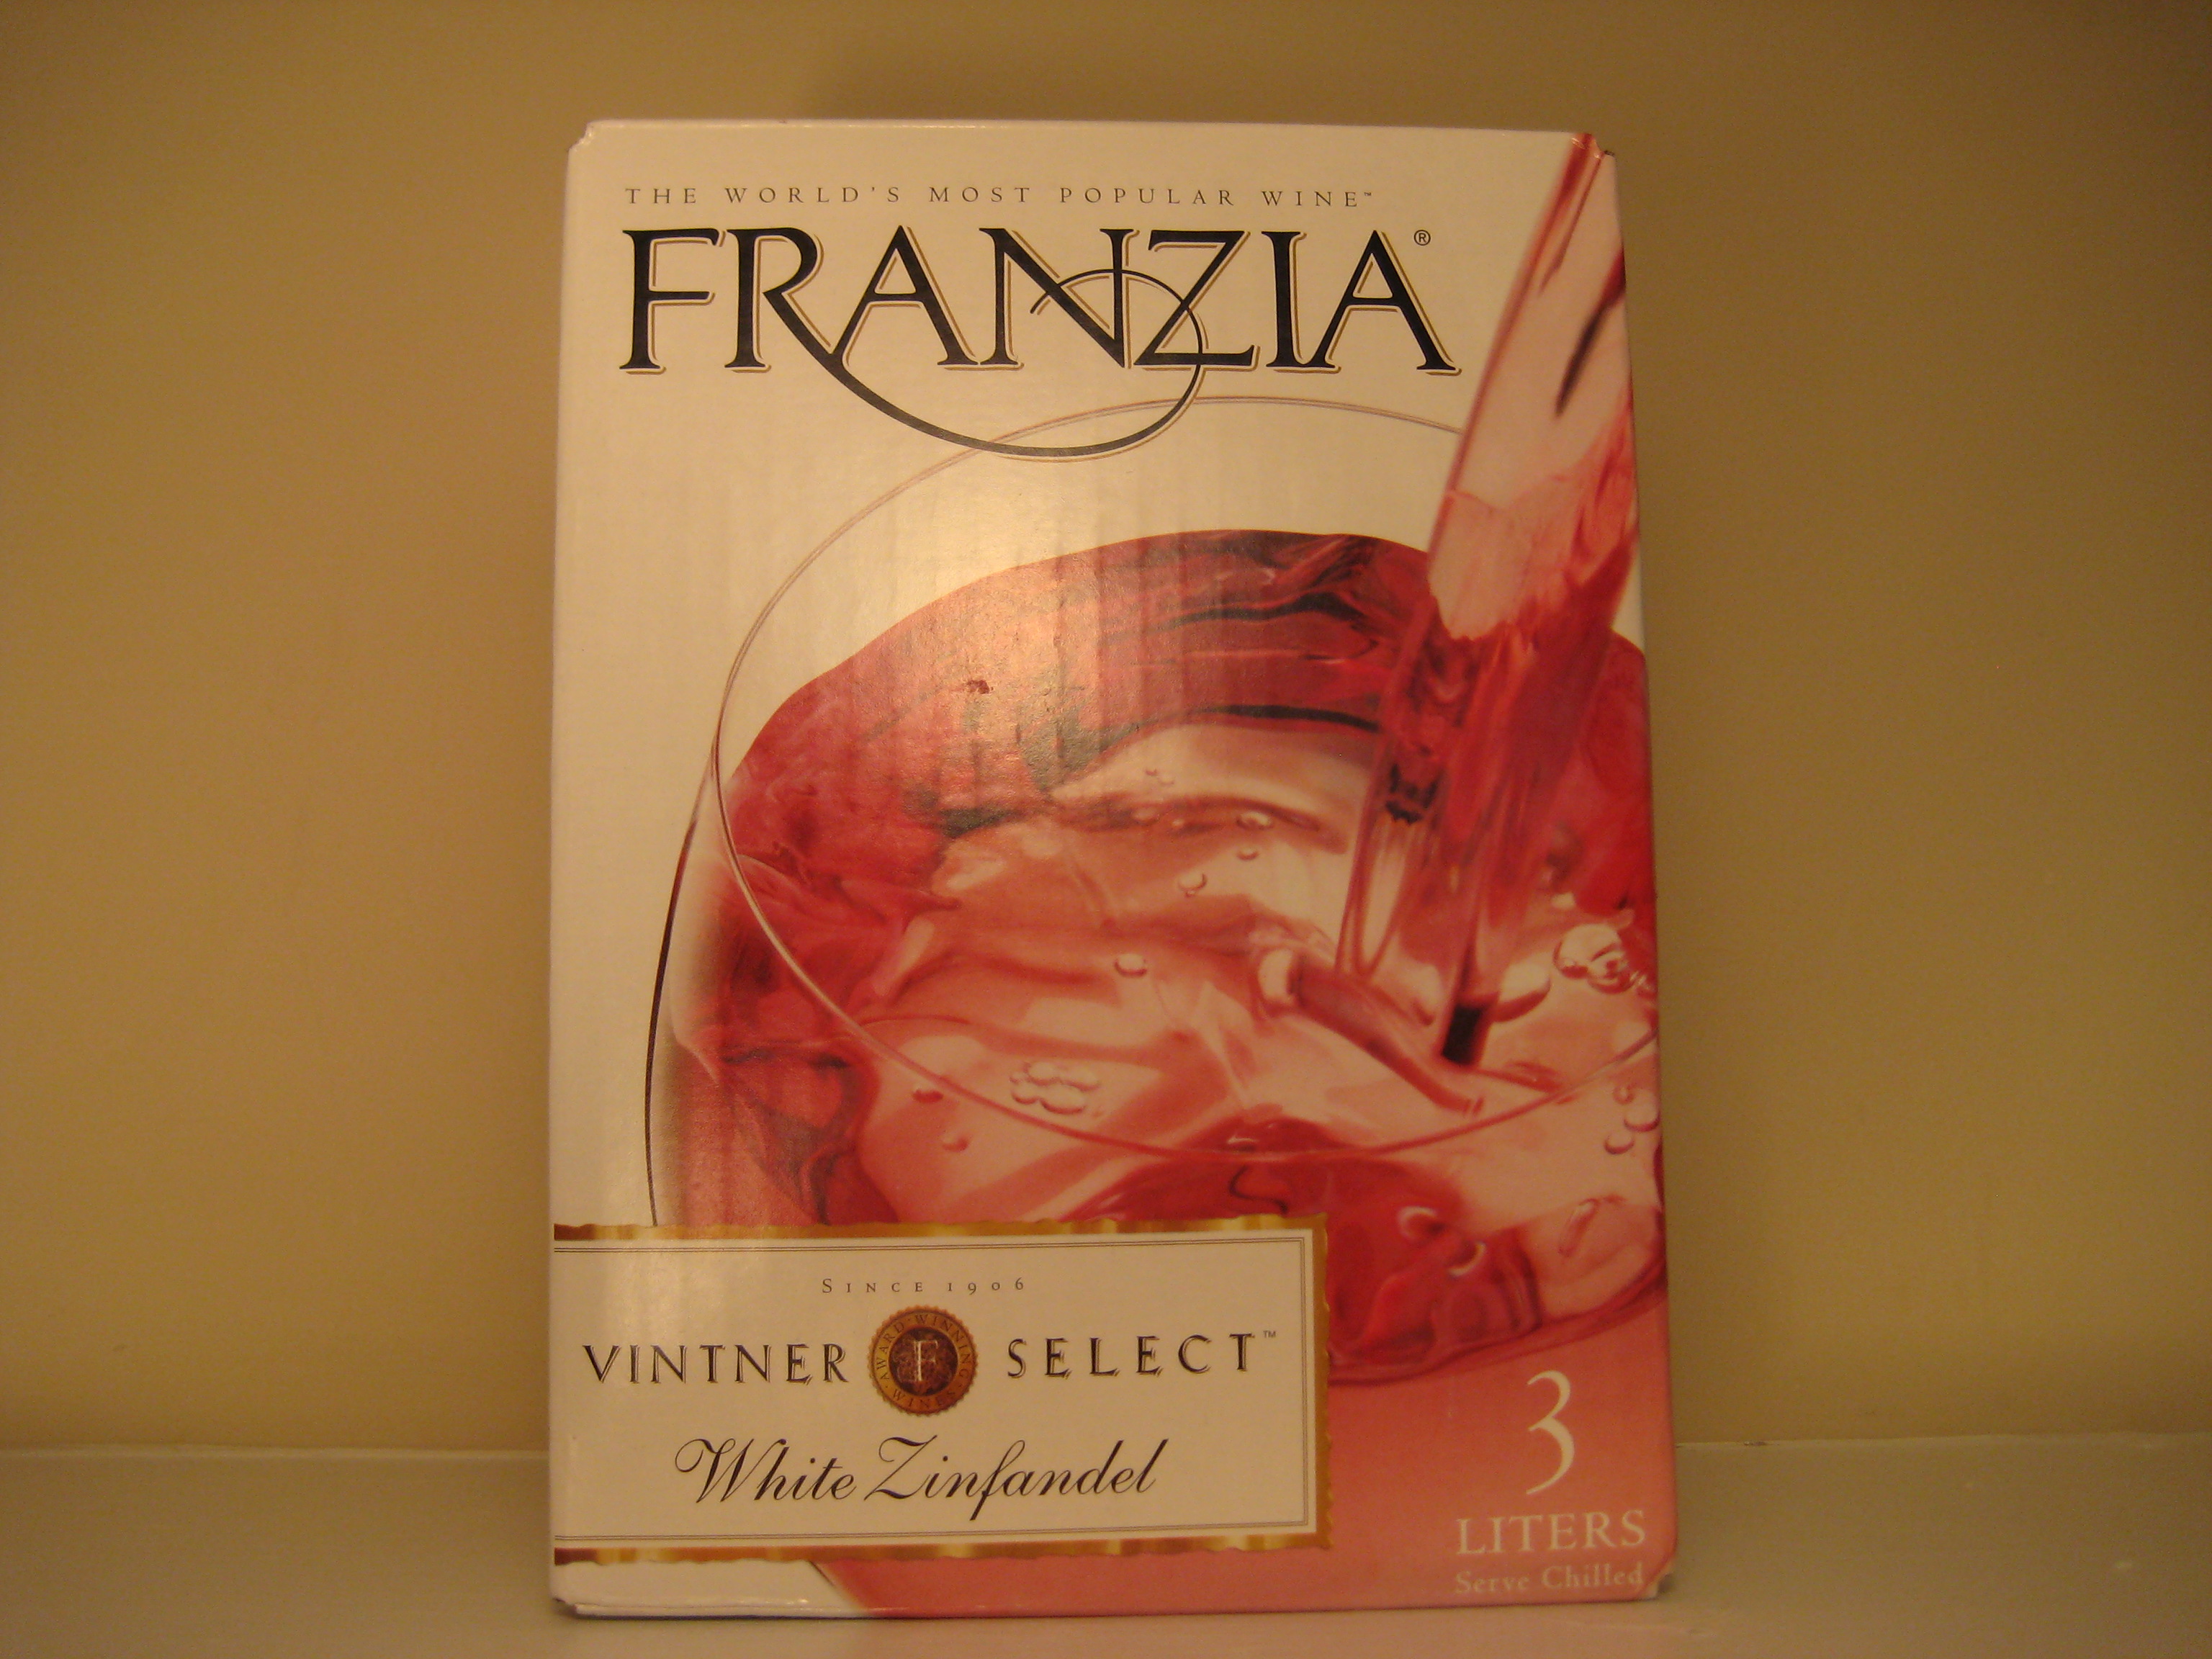 white zinfandel box wine